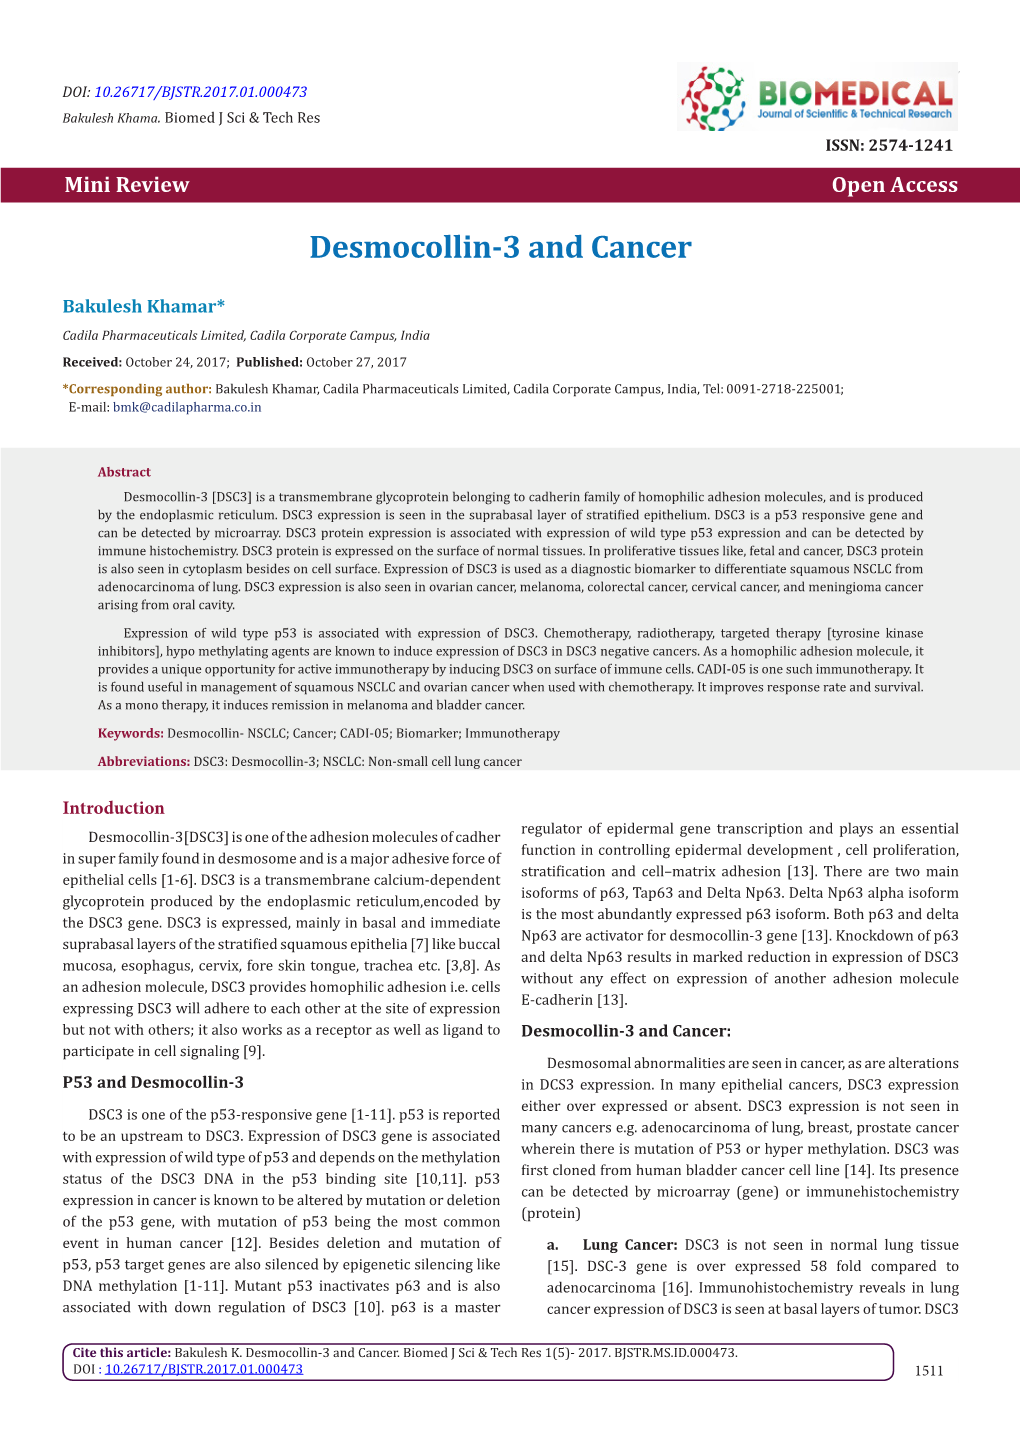 Desmocollin-3 and Cancer